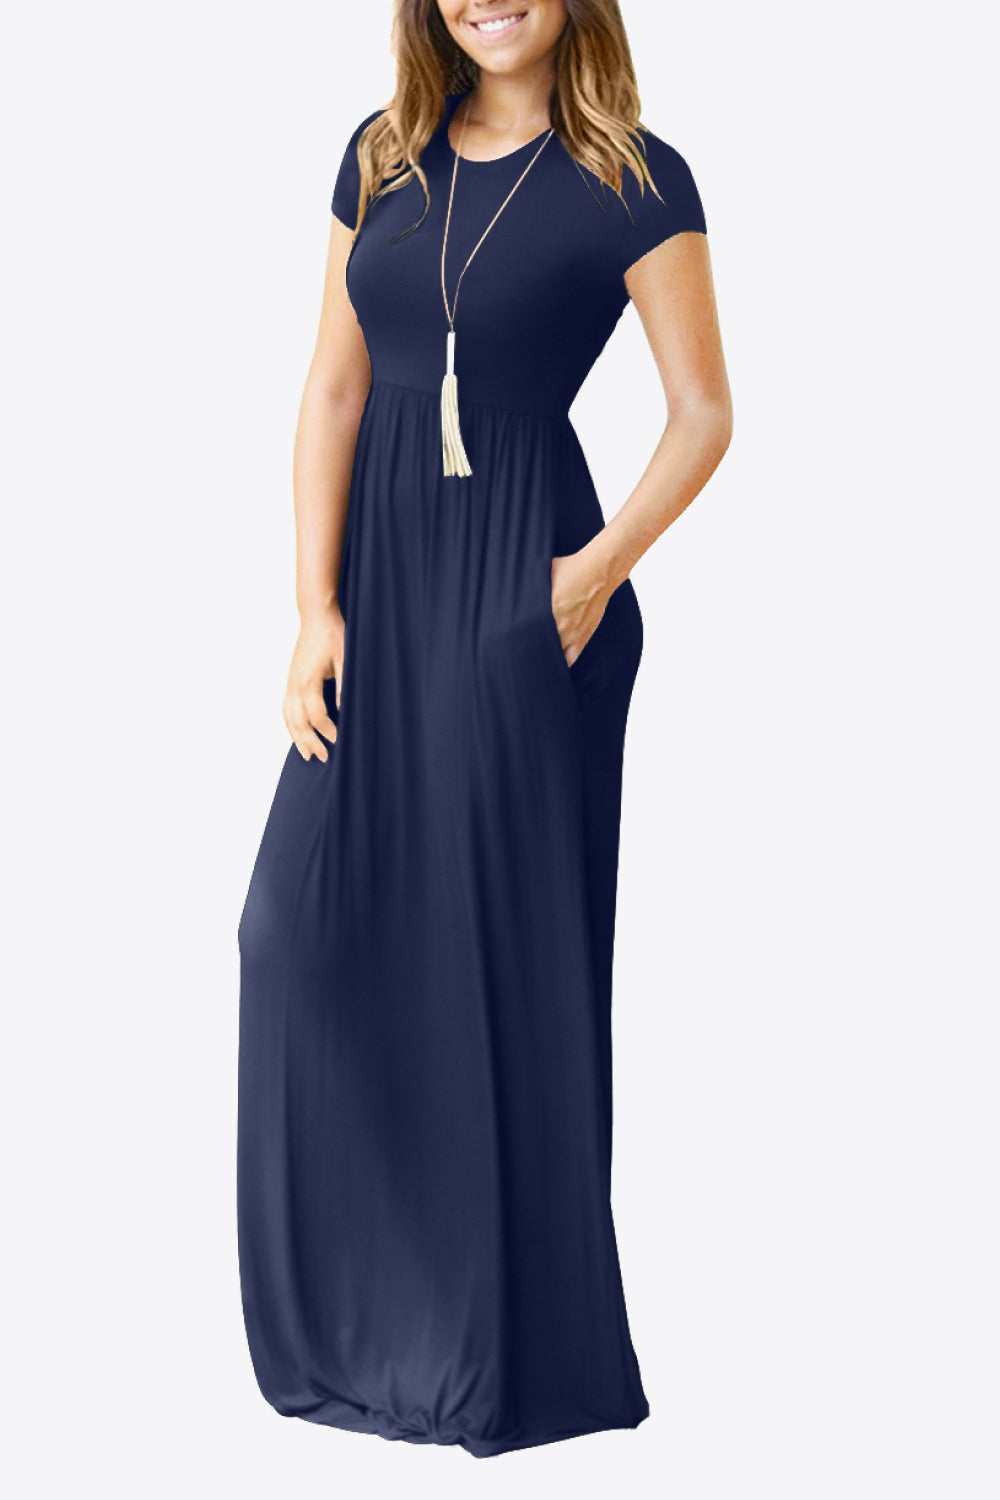 Full Size Short Sleeve Round Neck Dress with Pockets